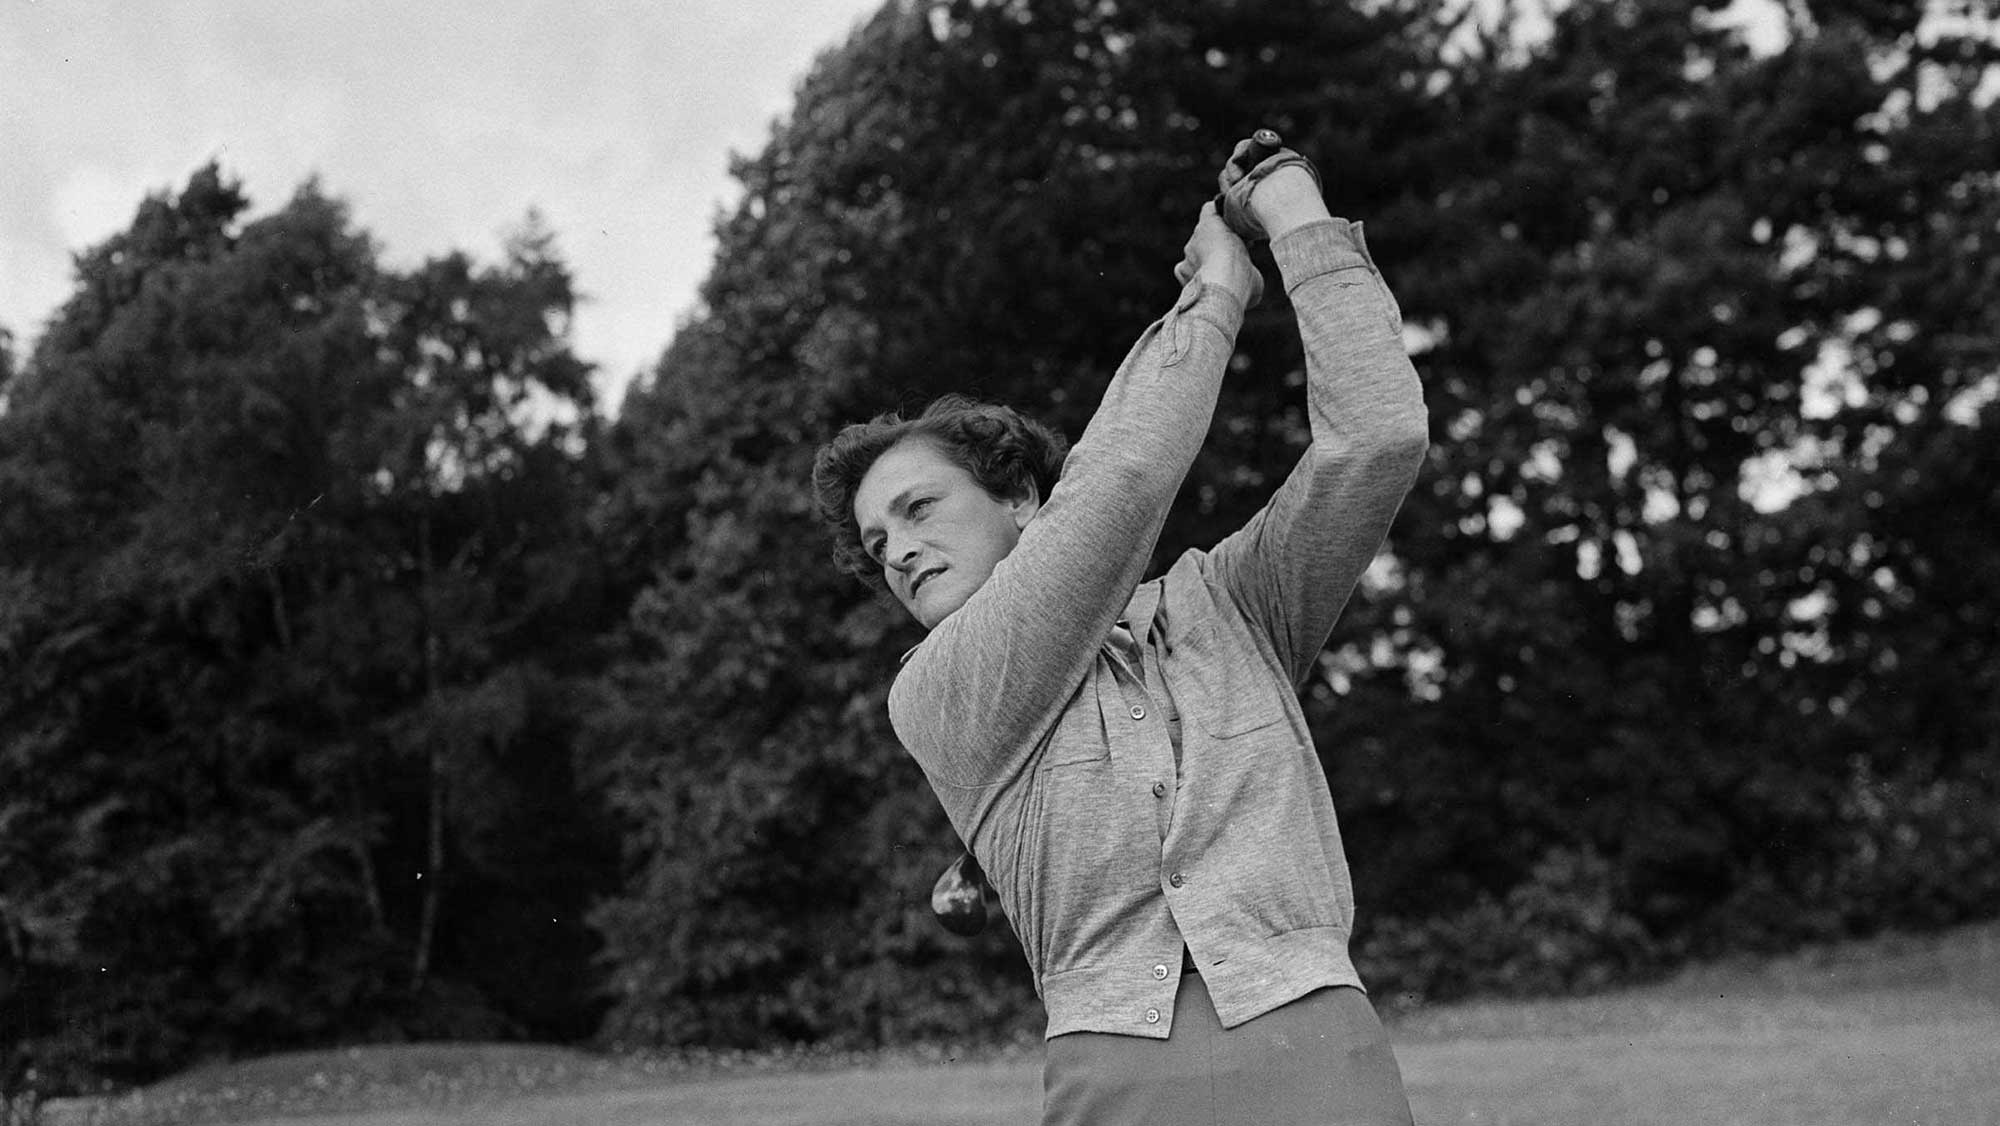 Babe Zaharias | professional female golfer | golf swing | black and white photo